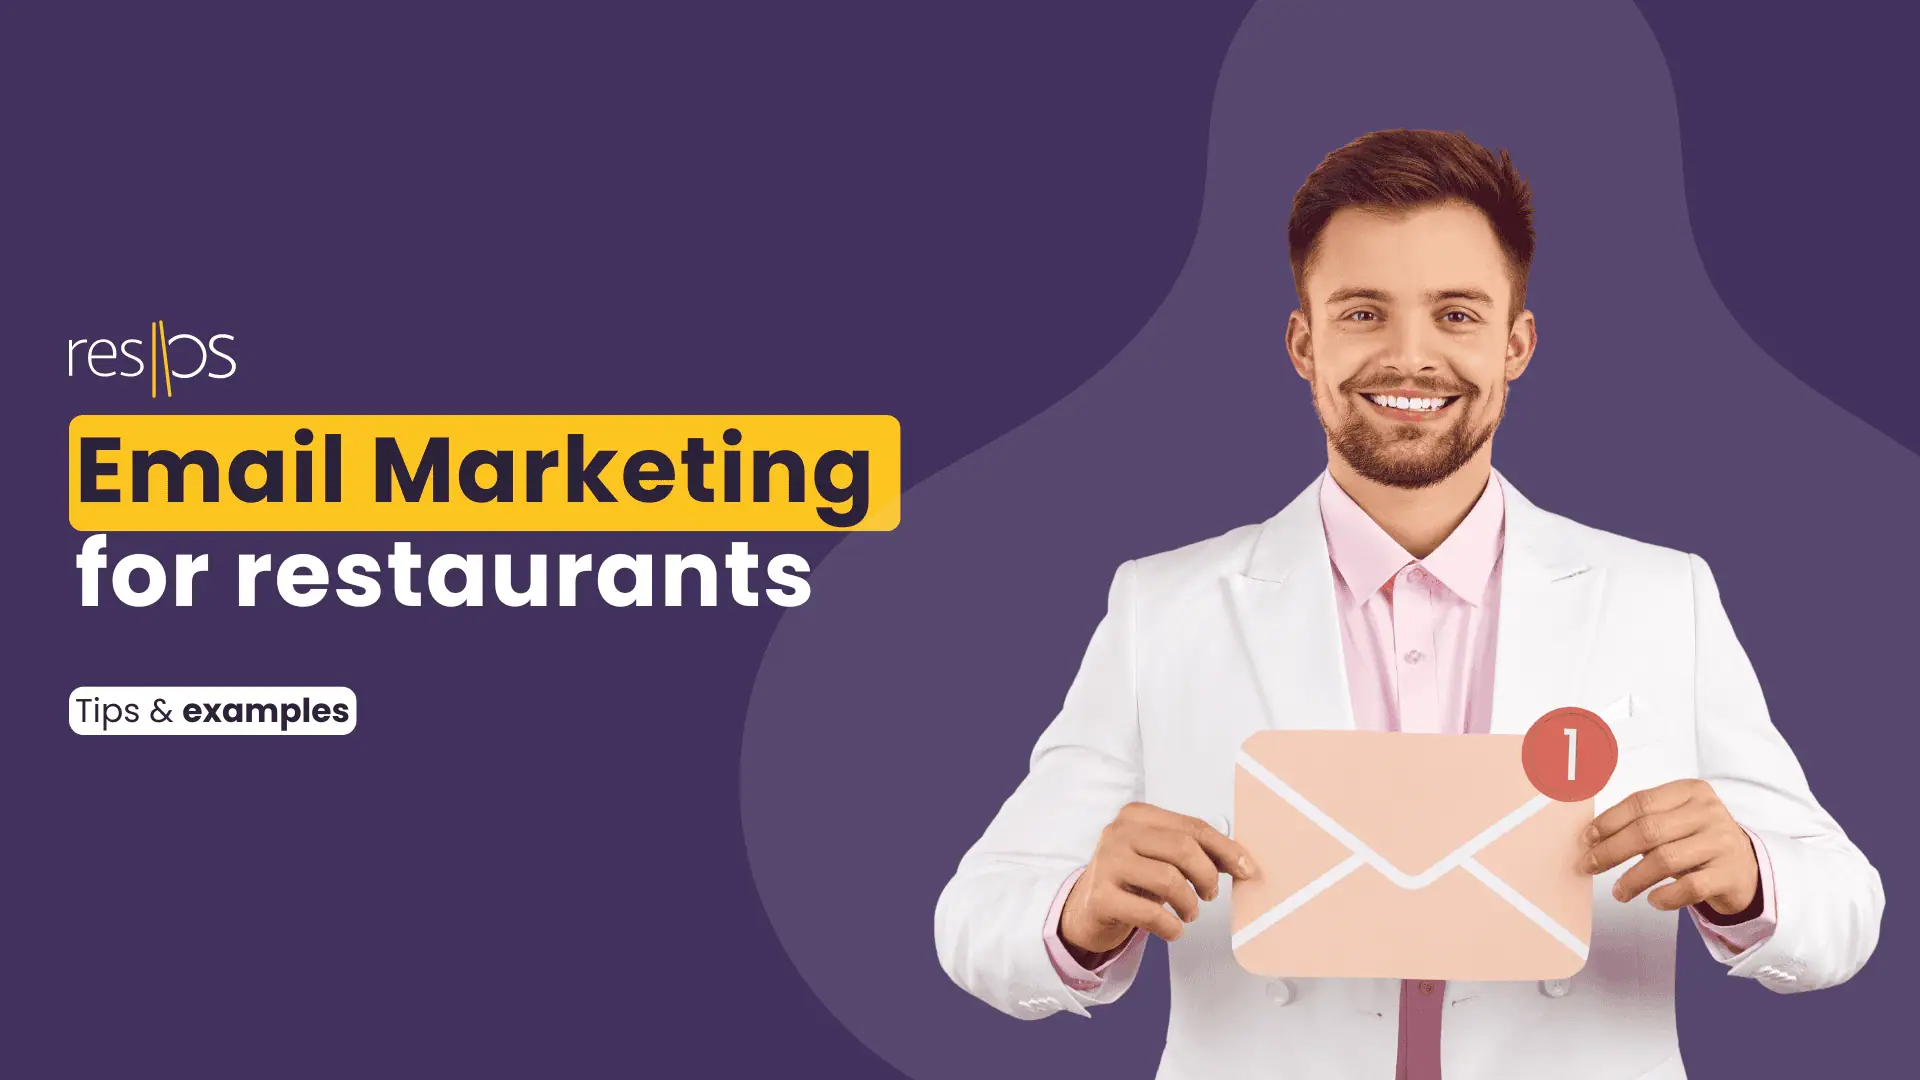 Email Marketing for restaurants